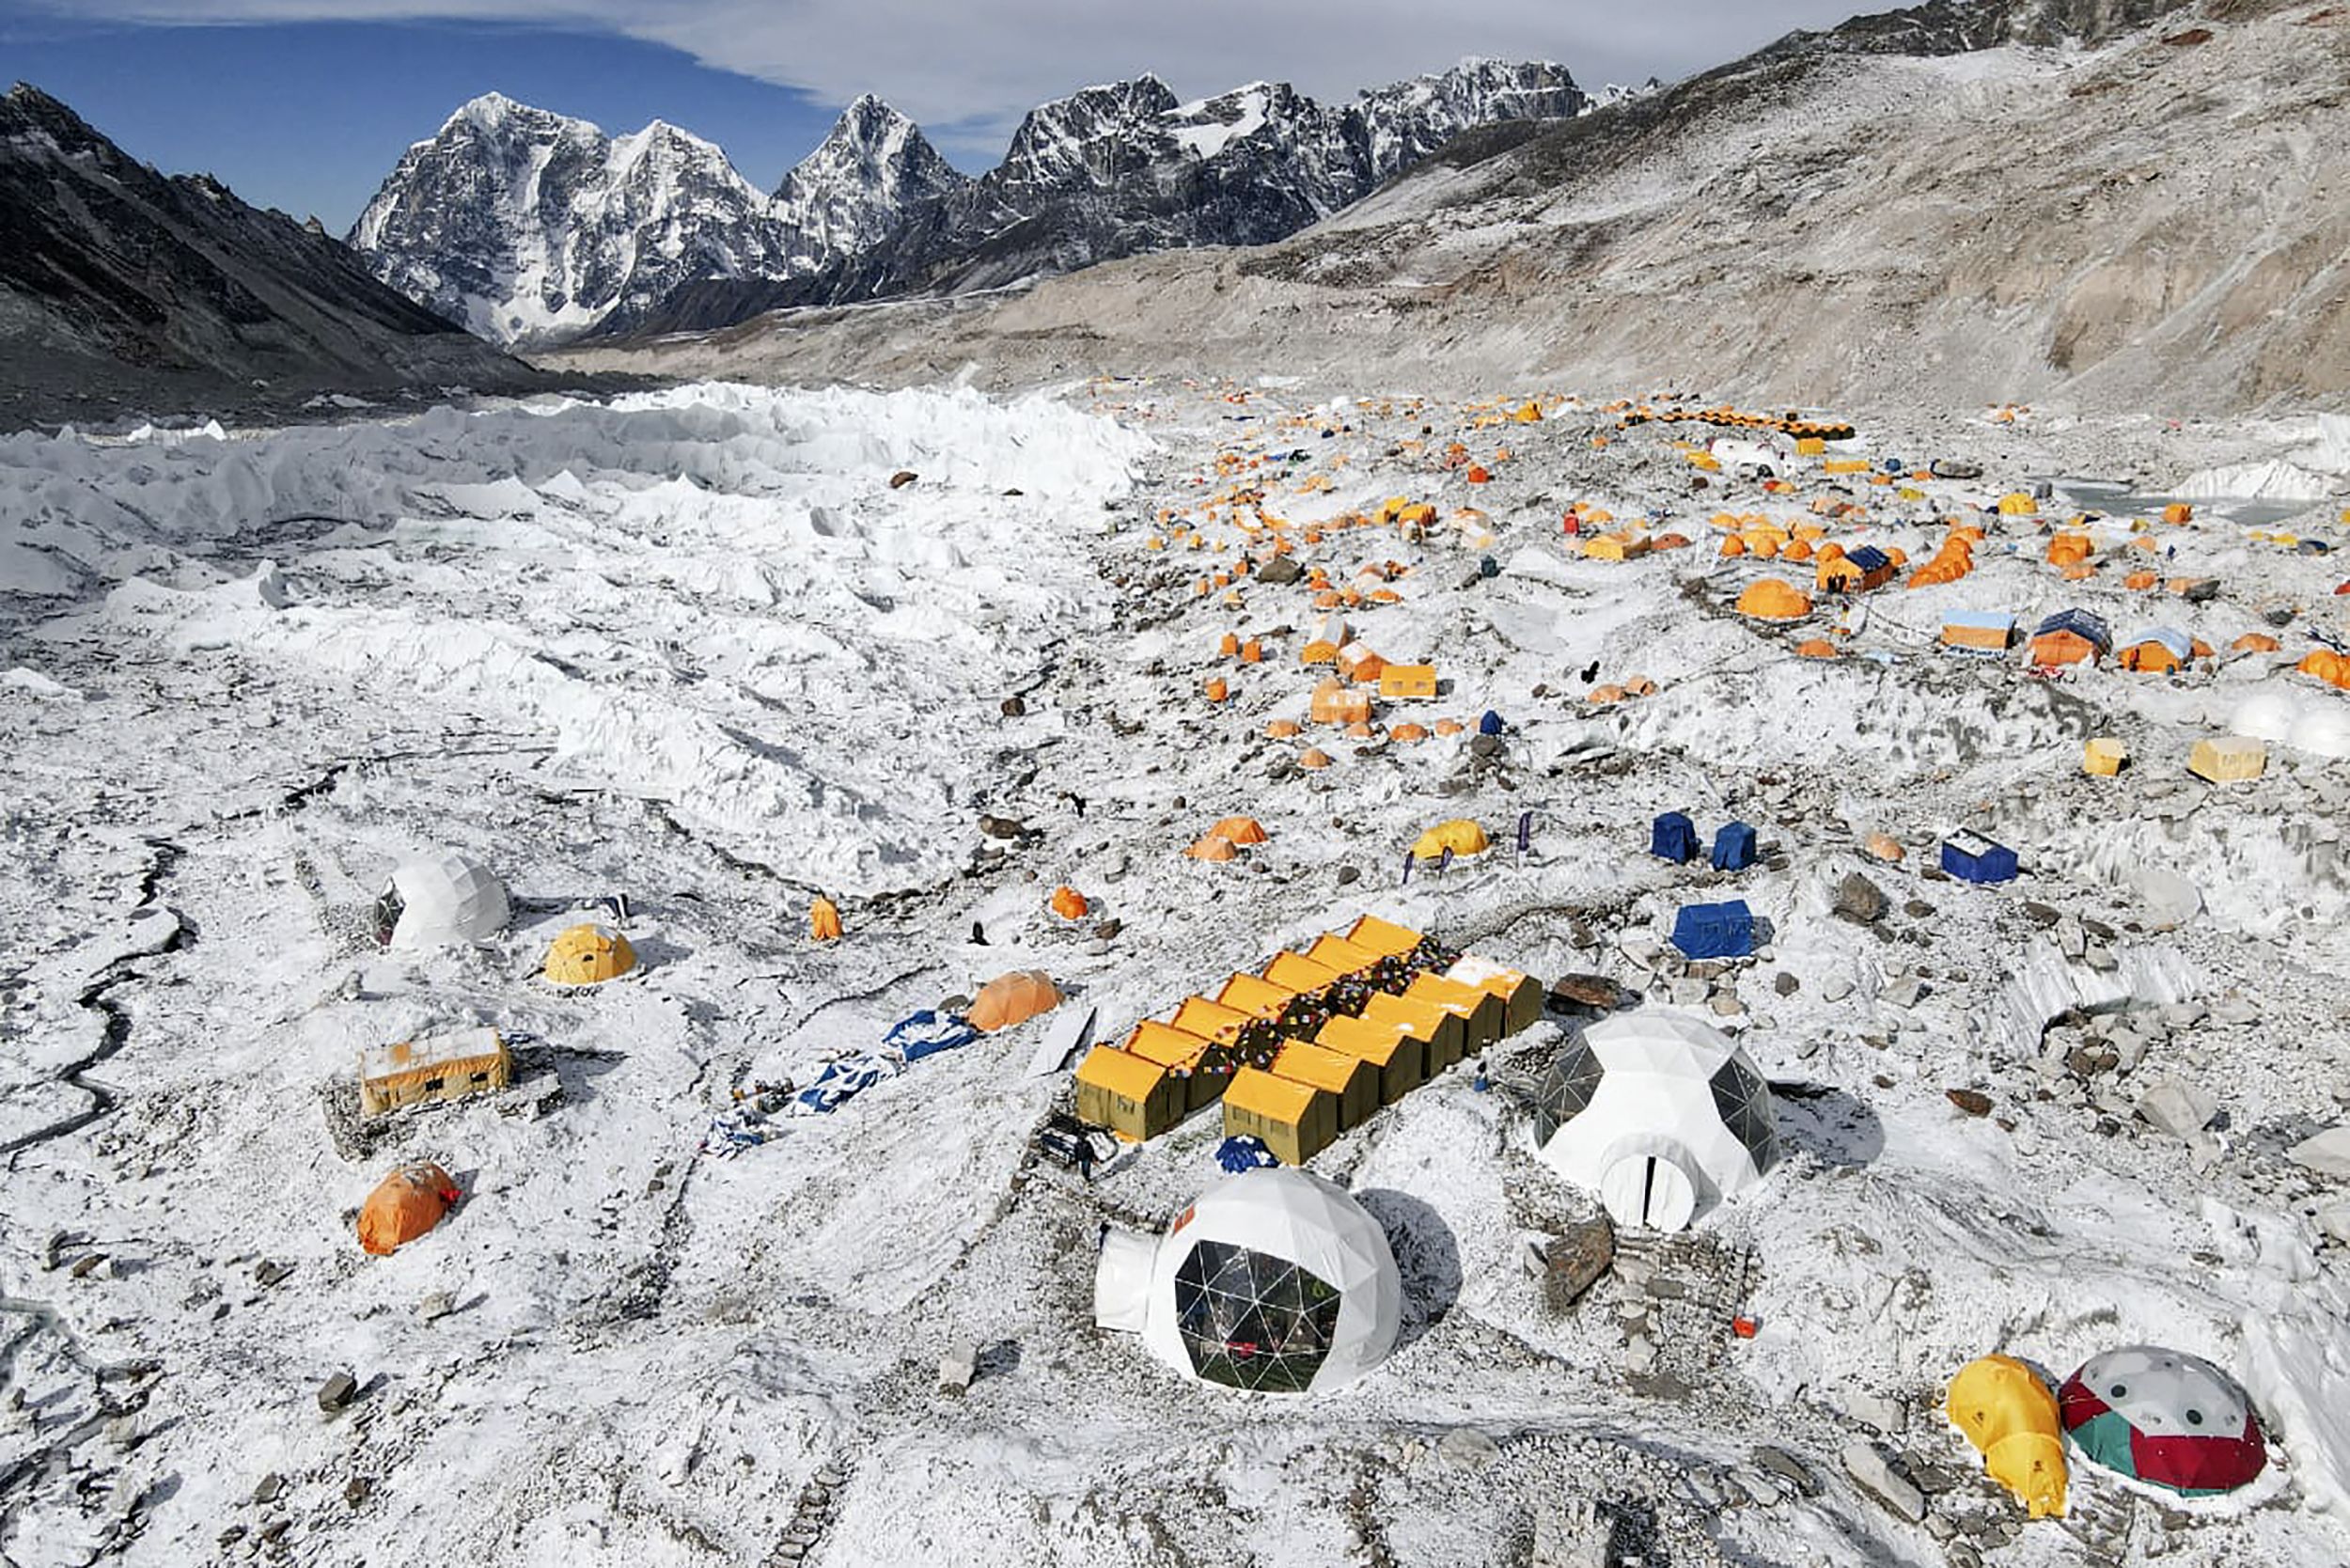 Gorakshep to Everest Base Camp (5365m/17597ft) Return to Gorskshep. O/n at Mountain Lodge.'